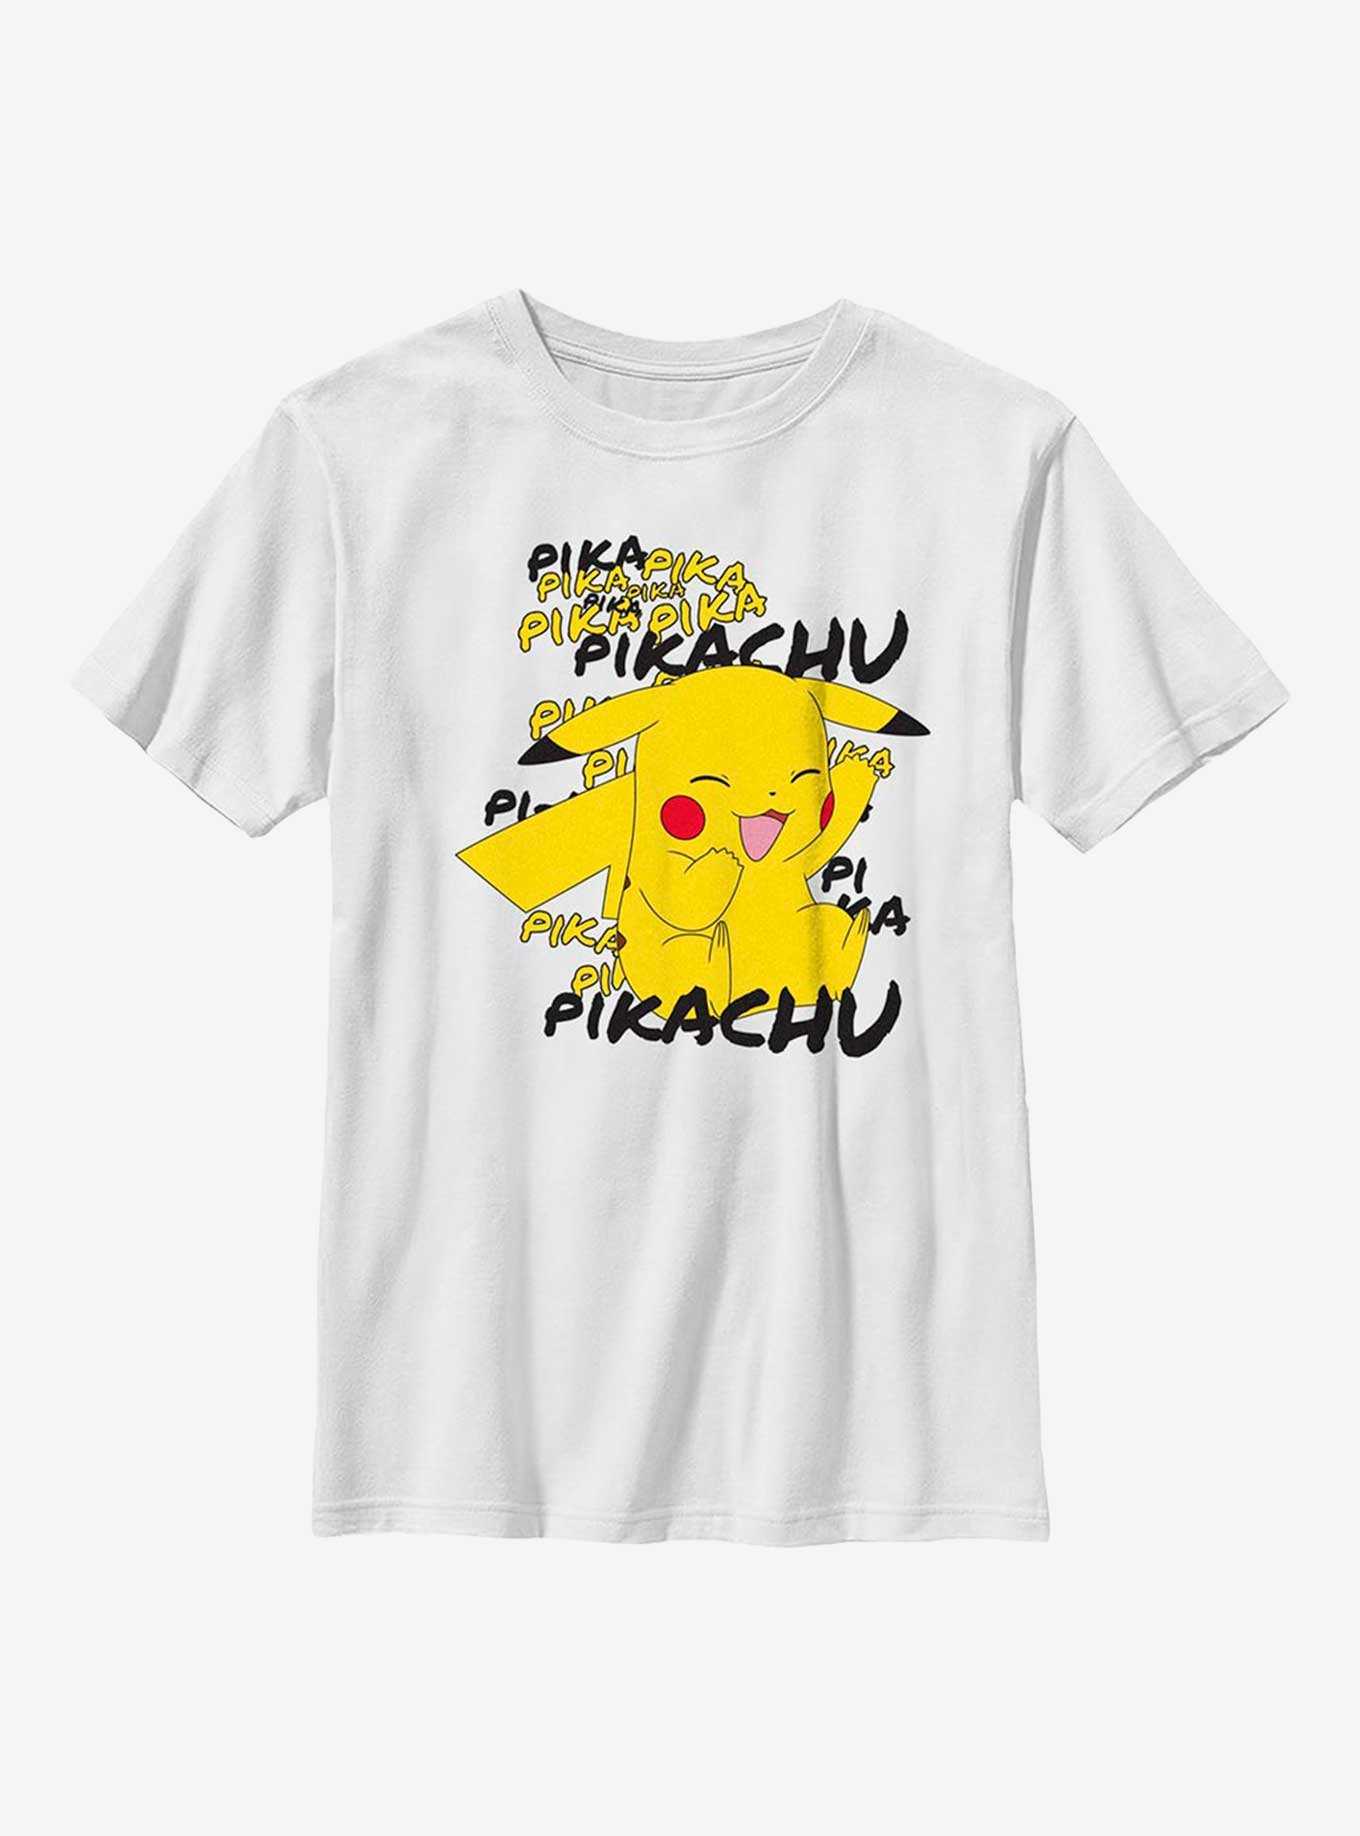 Pokémon Pikachu Cracks A Joke Youth T-Shirt, , hi-res